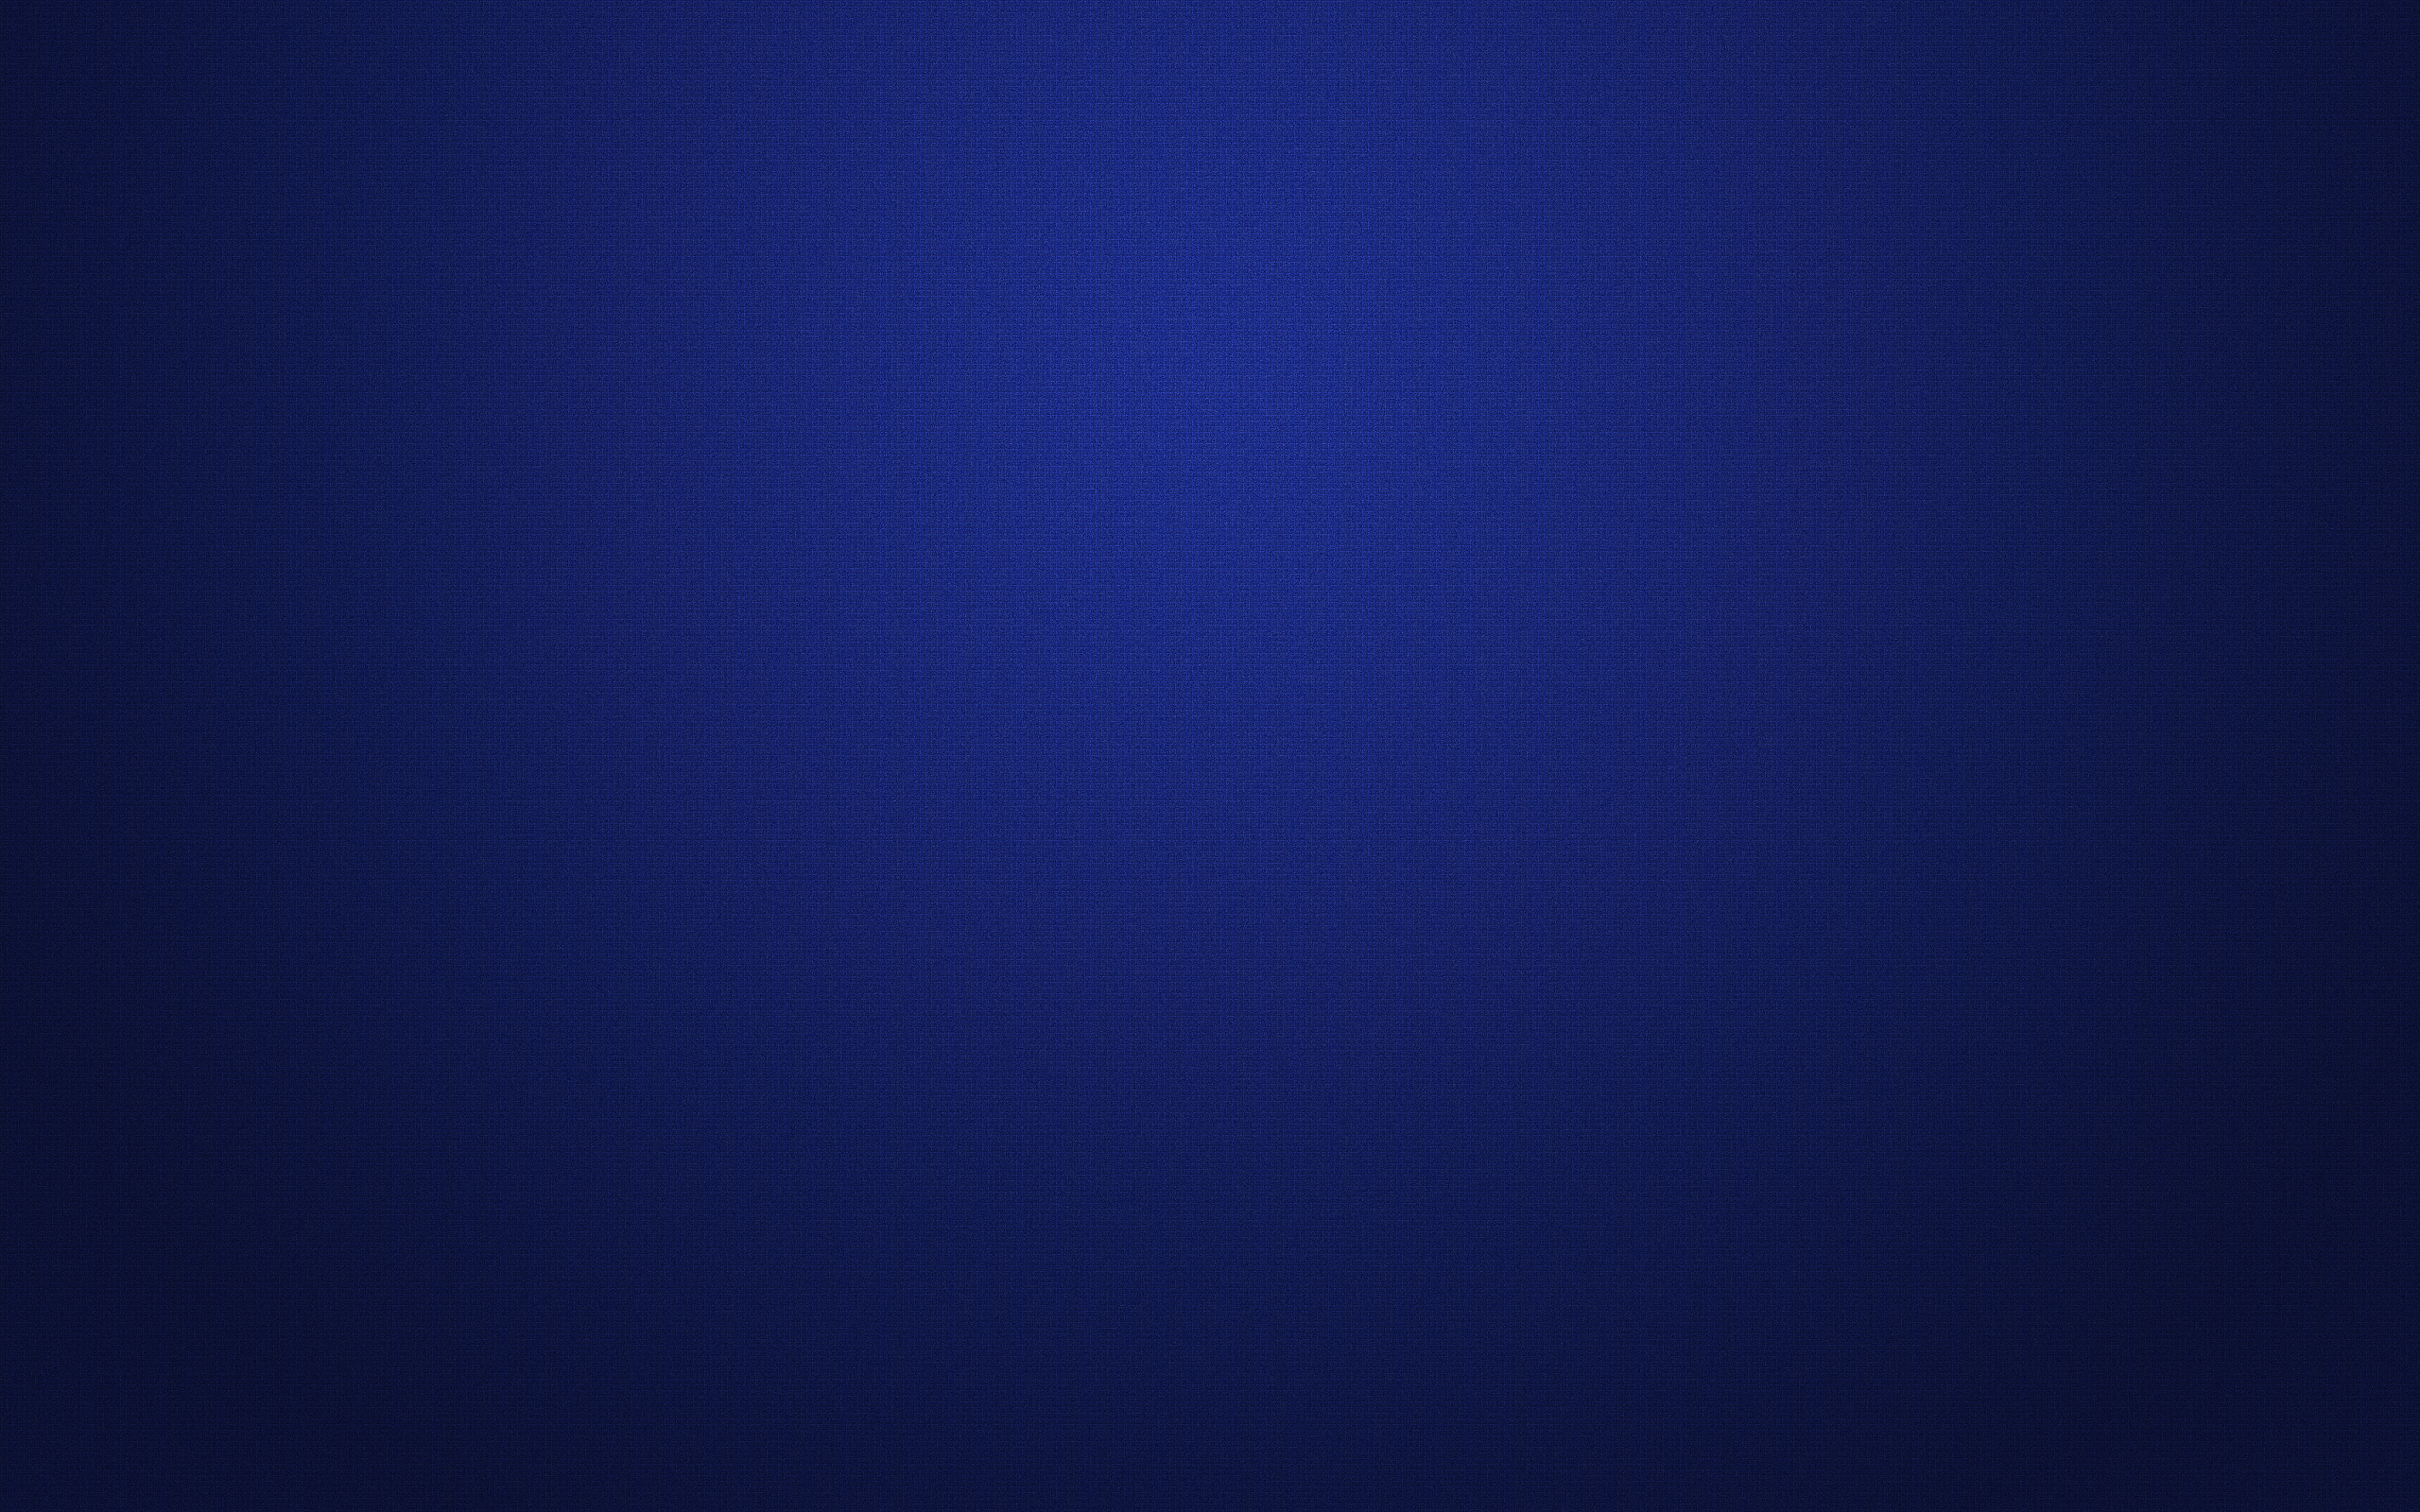 teal full hd backgrounds blue resolution 25601600 pixel hd wallpaper